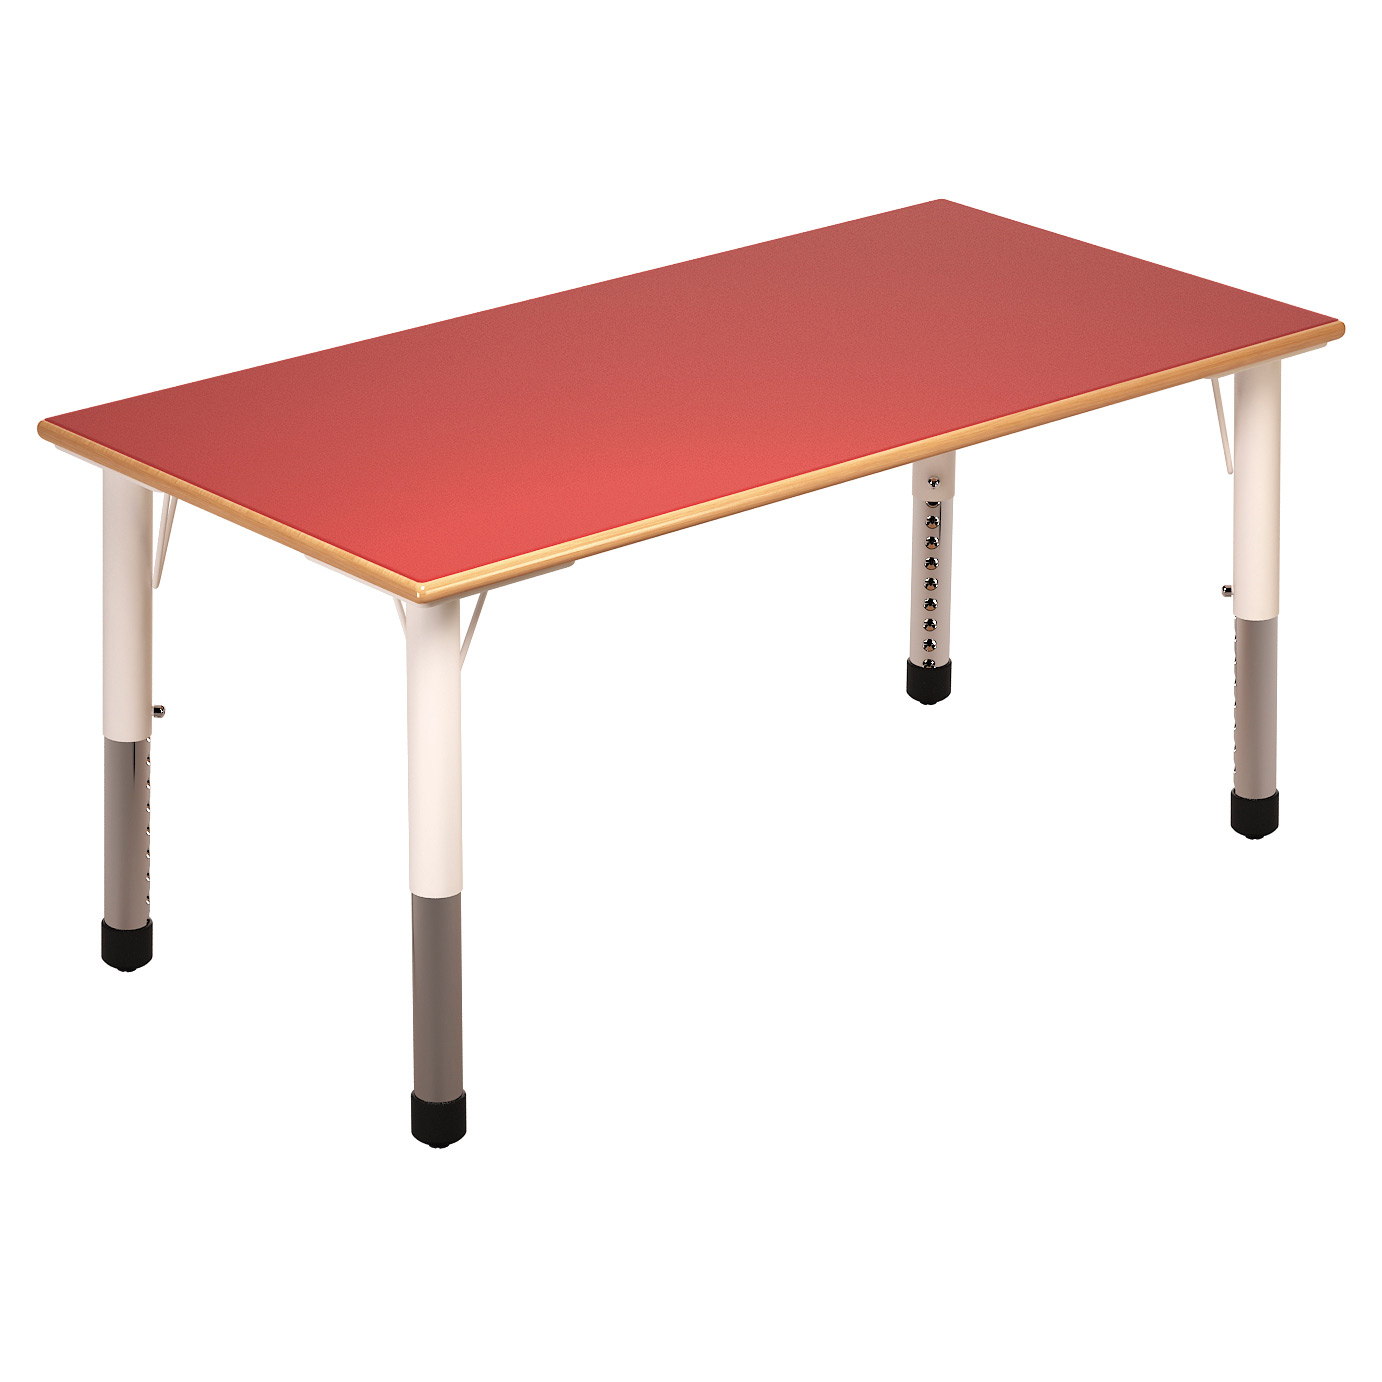 Childrens rectangular height adjustable table 1200 x 600 mm